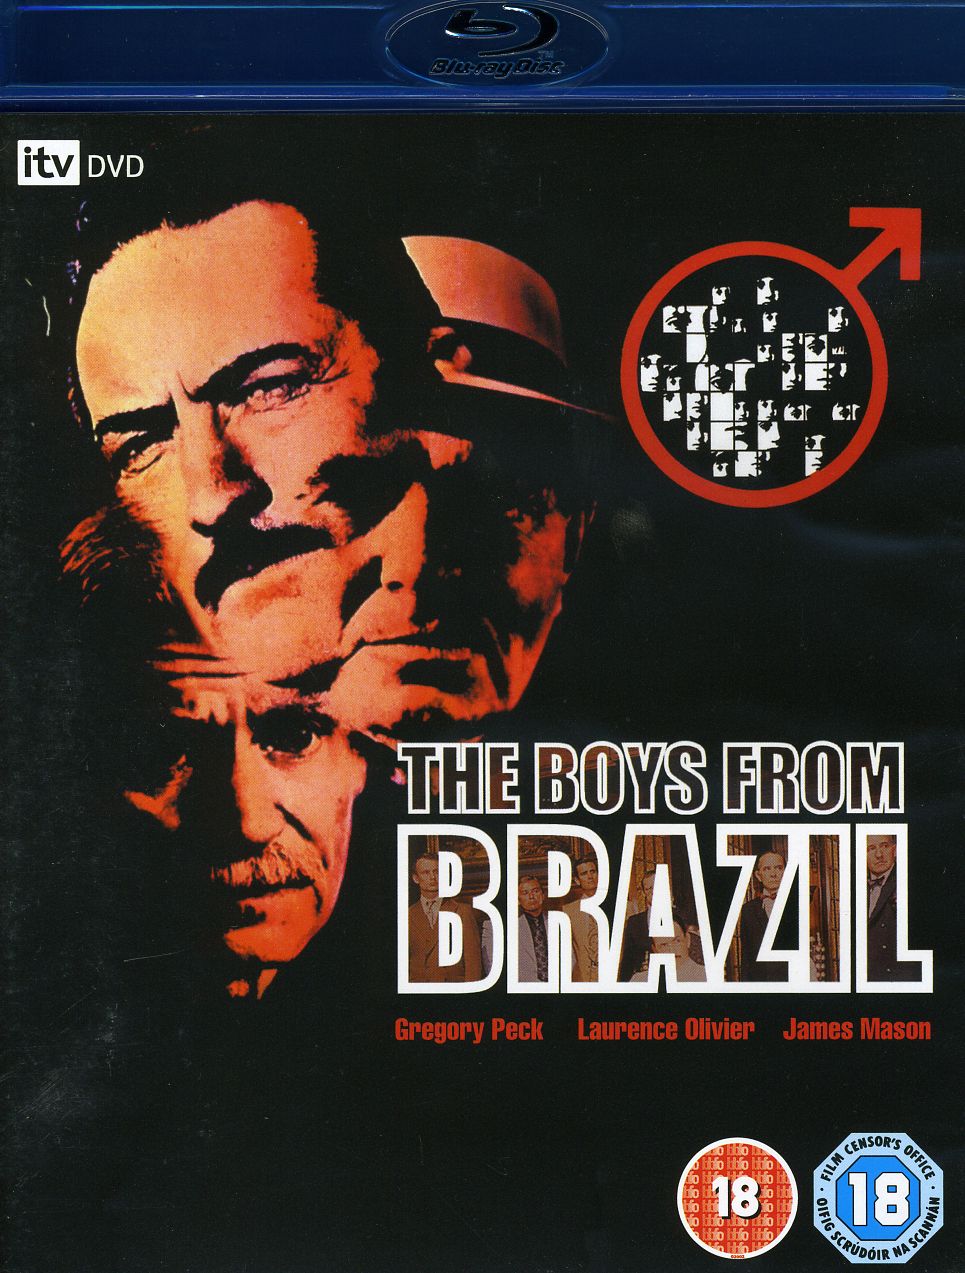 BOYS FROM BRAZIL (1978)